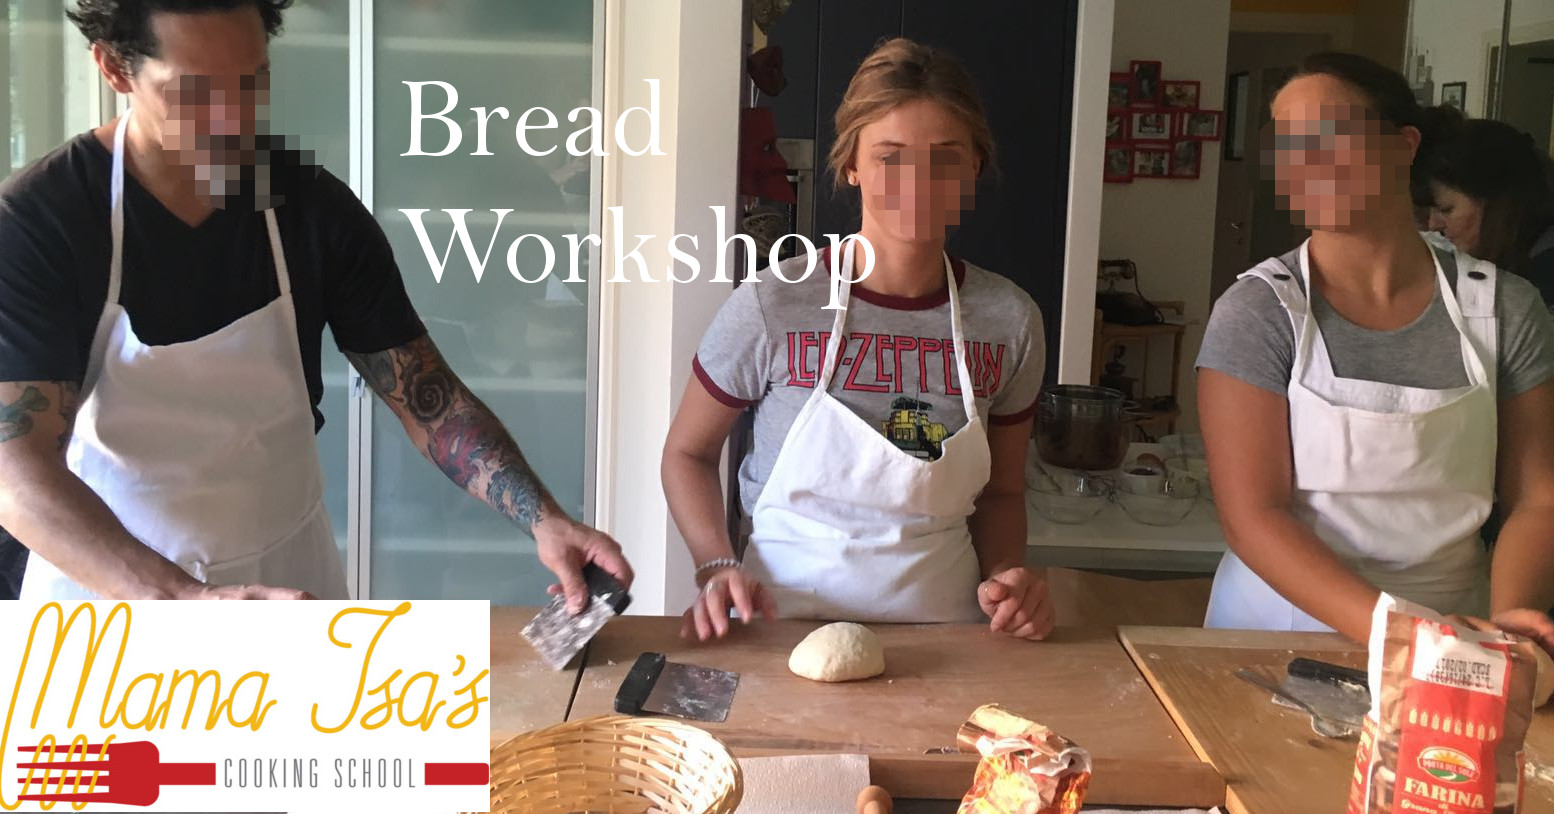 Bread Workshop Venice in Italy